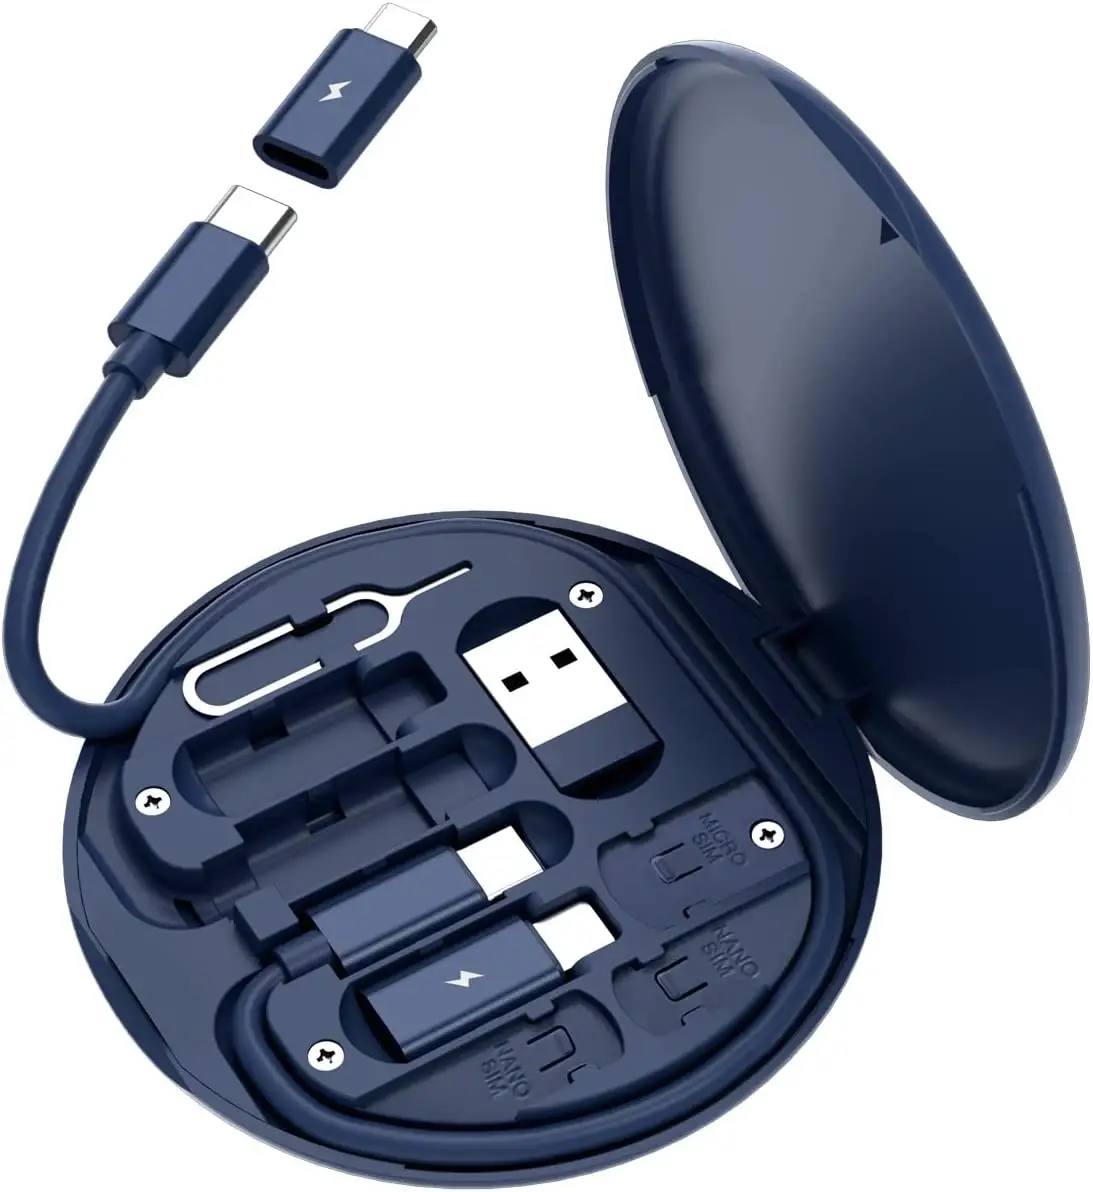 Huien Multi Type Ladele itungs konverter Beleuchtung Typ C Mikrodaten übertragungs tool USB-Adapter Kabel umwandlung Aufbewahrung sbox